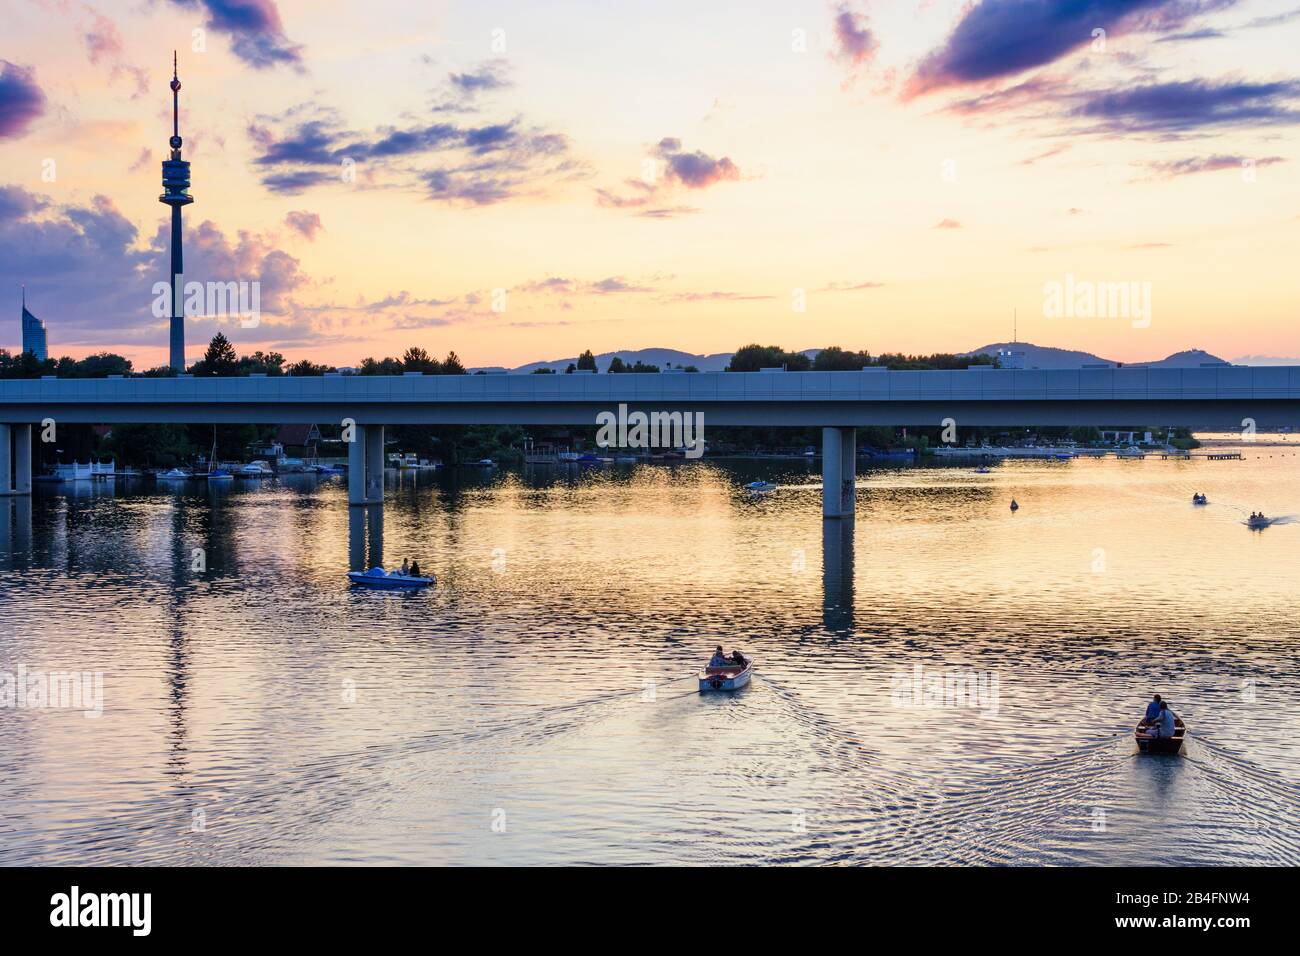 Wien / Vienna, oxbow lake river Alte Donau (Old Danube), sunset, tower Donauturm, bridge subway line 1, boat in 22. Donaustadt, Wien, Austria Stock Photo